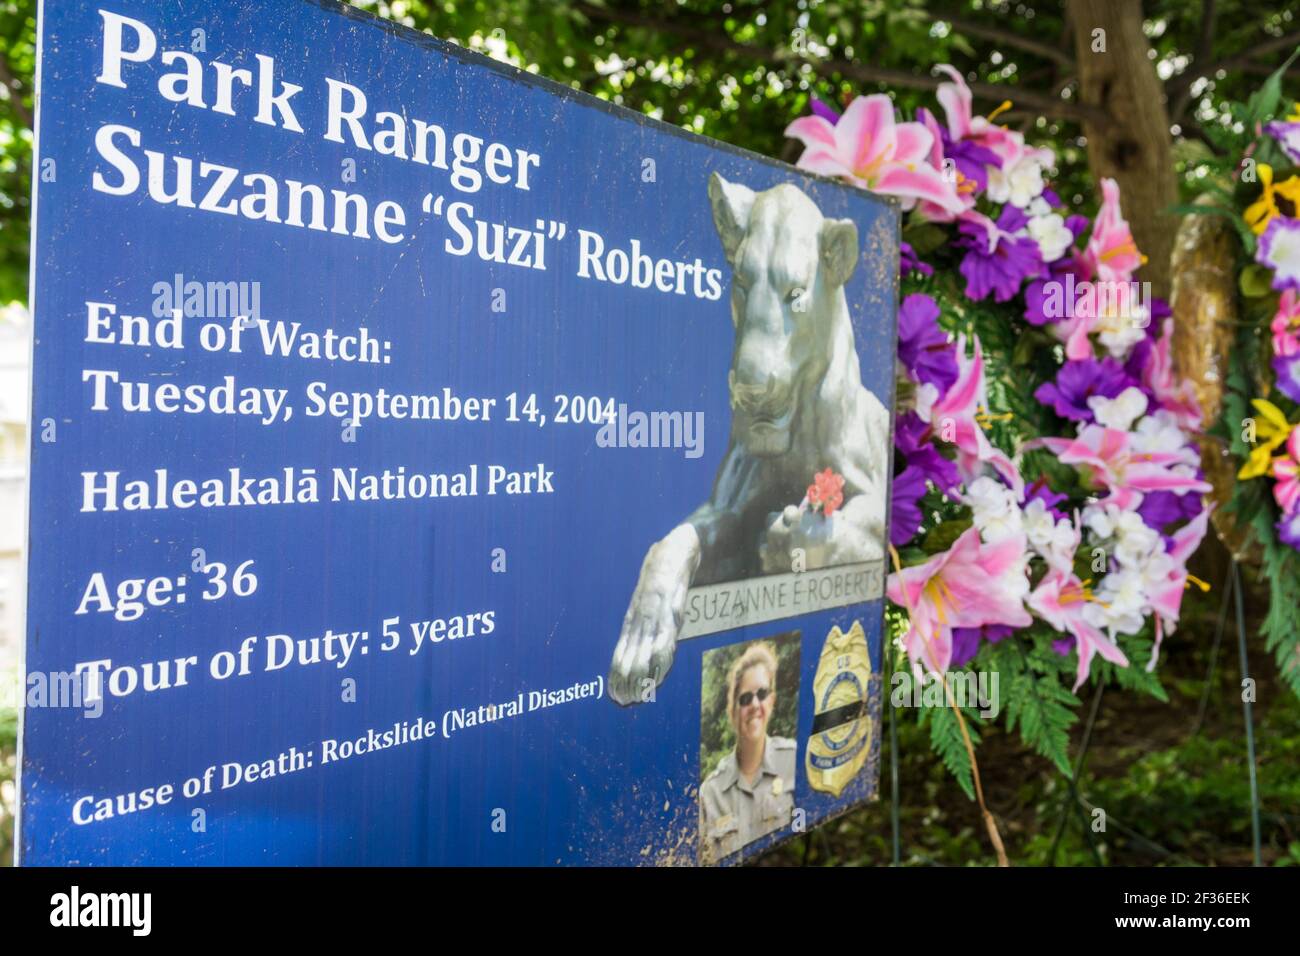 Washington DC, National Law Enforcement Officers Memorial, Kranz Blumen Haleakala Nationalpark, Park Ranger, Naturkatastrophe, Todesursache, Stockfoto